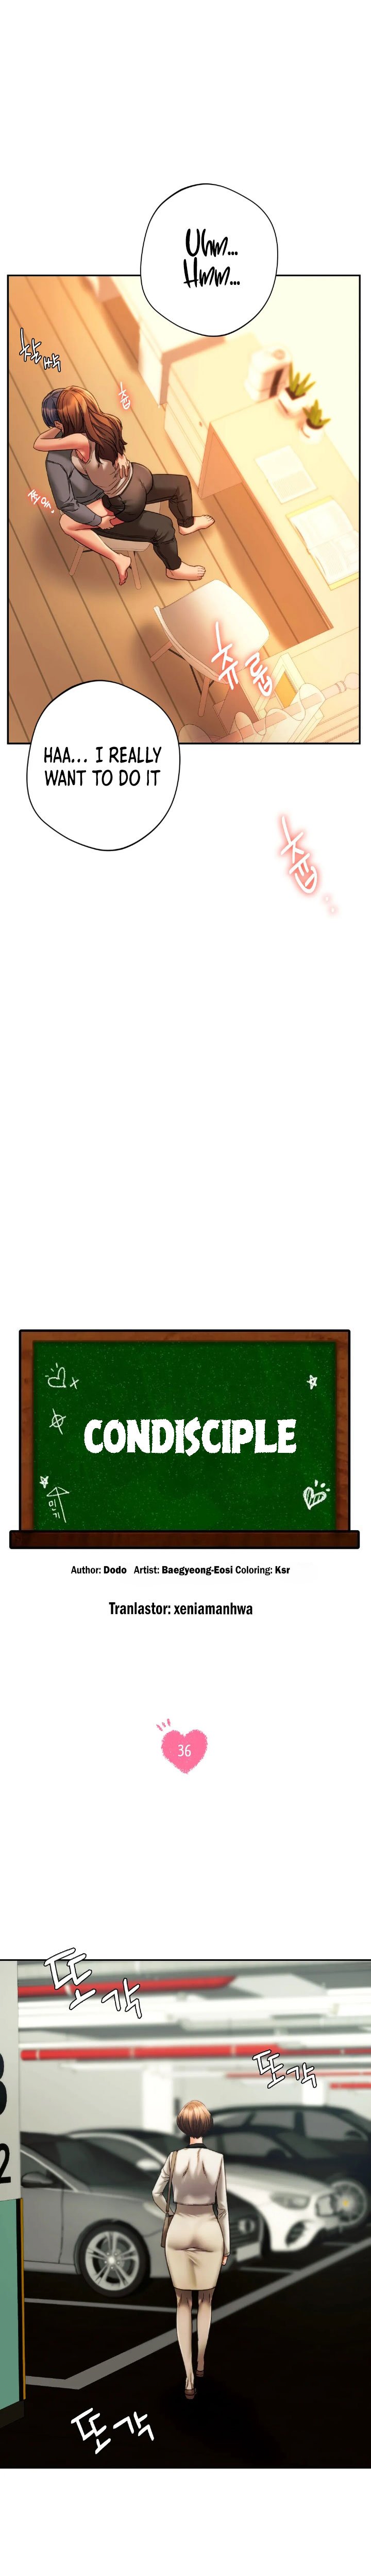 condisciple-chap-36-1